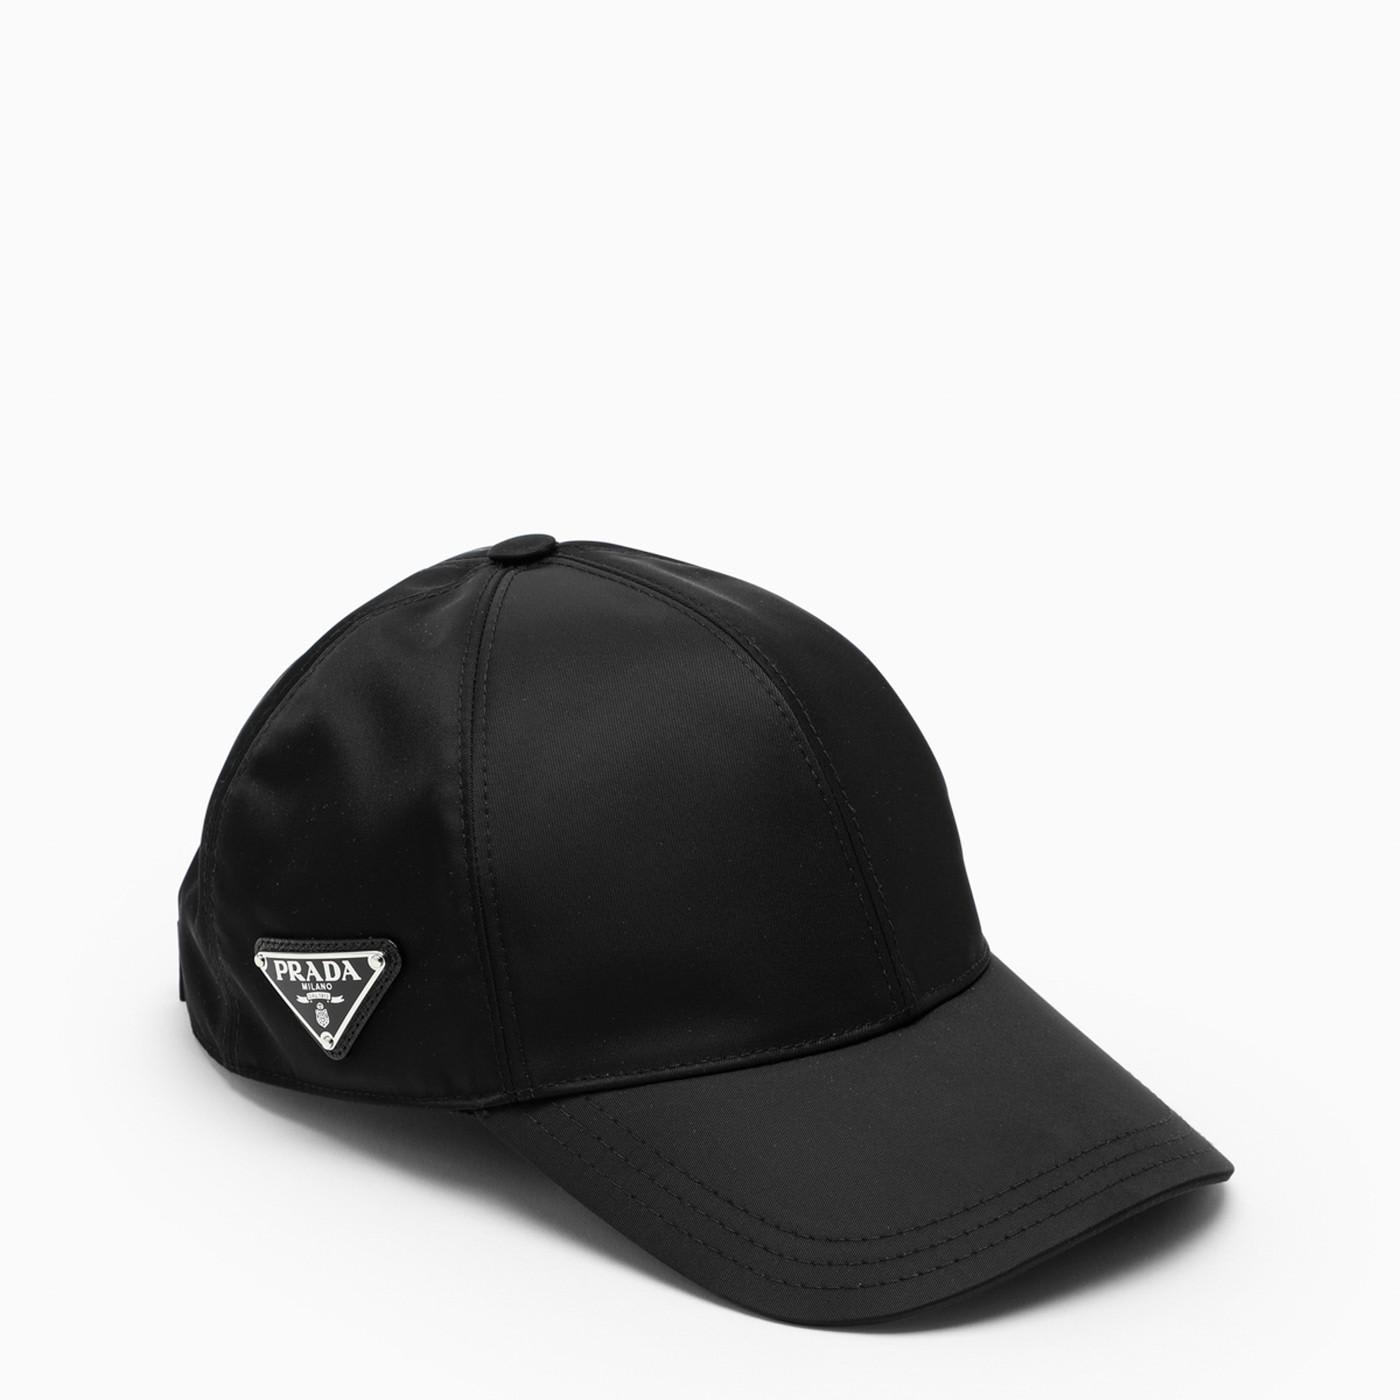 Prada Black Cap With Visor